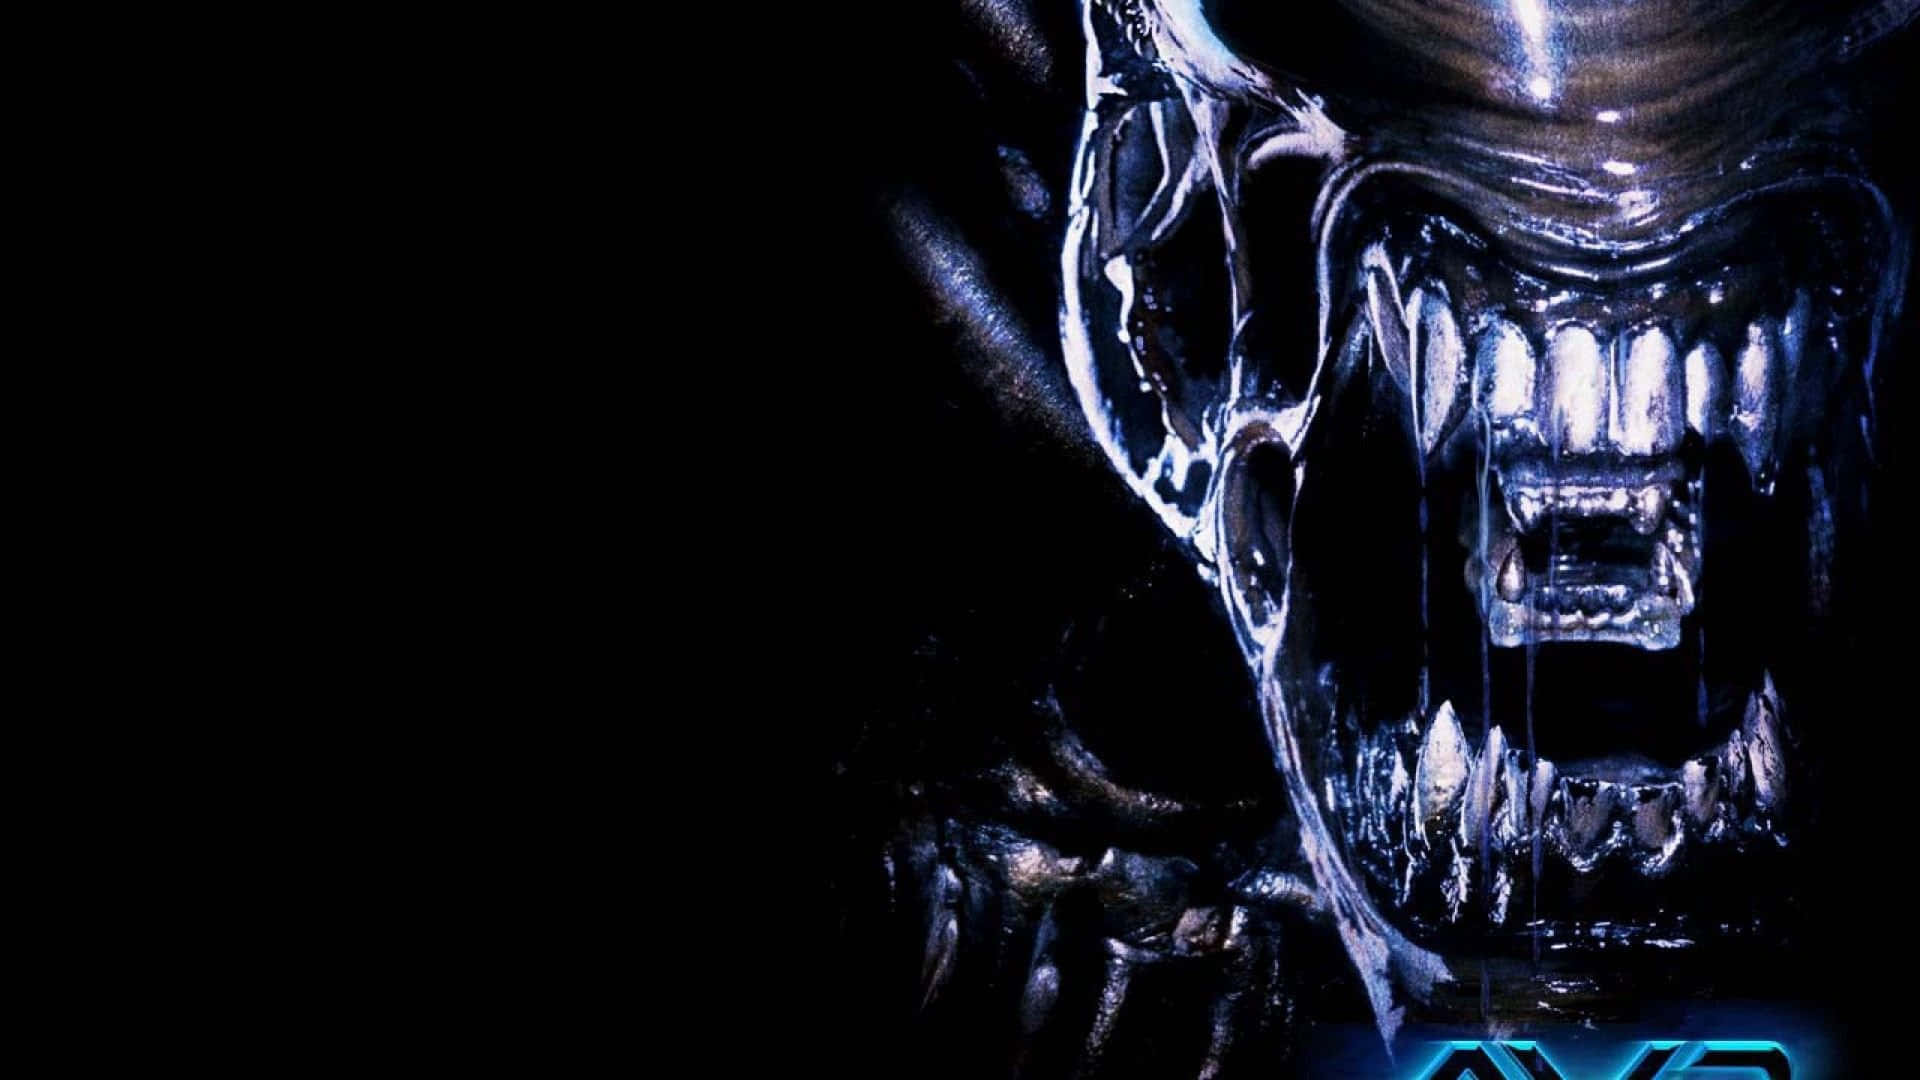 Alien Vs Predator vred mund Wallpaper